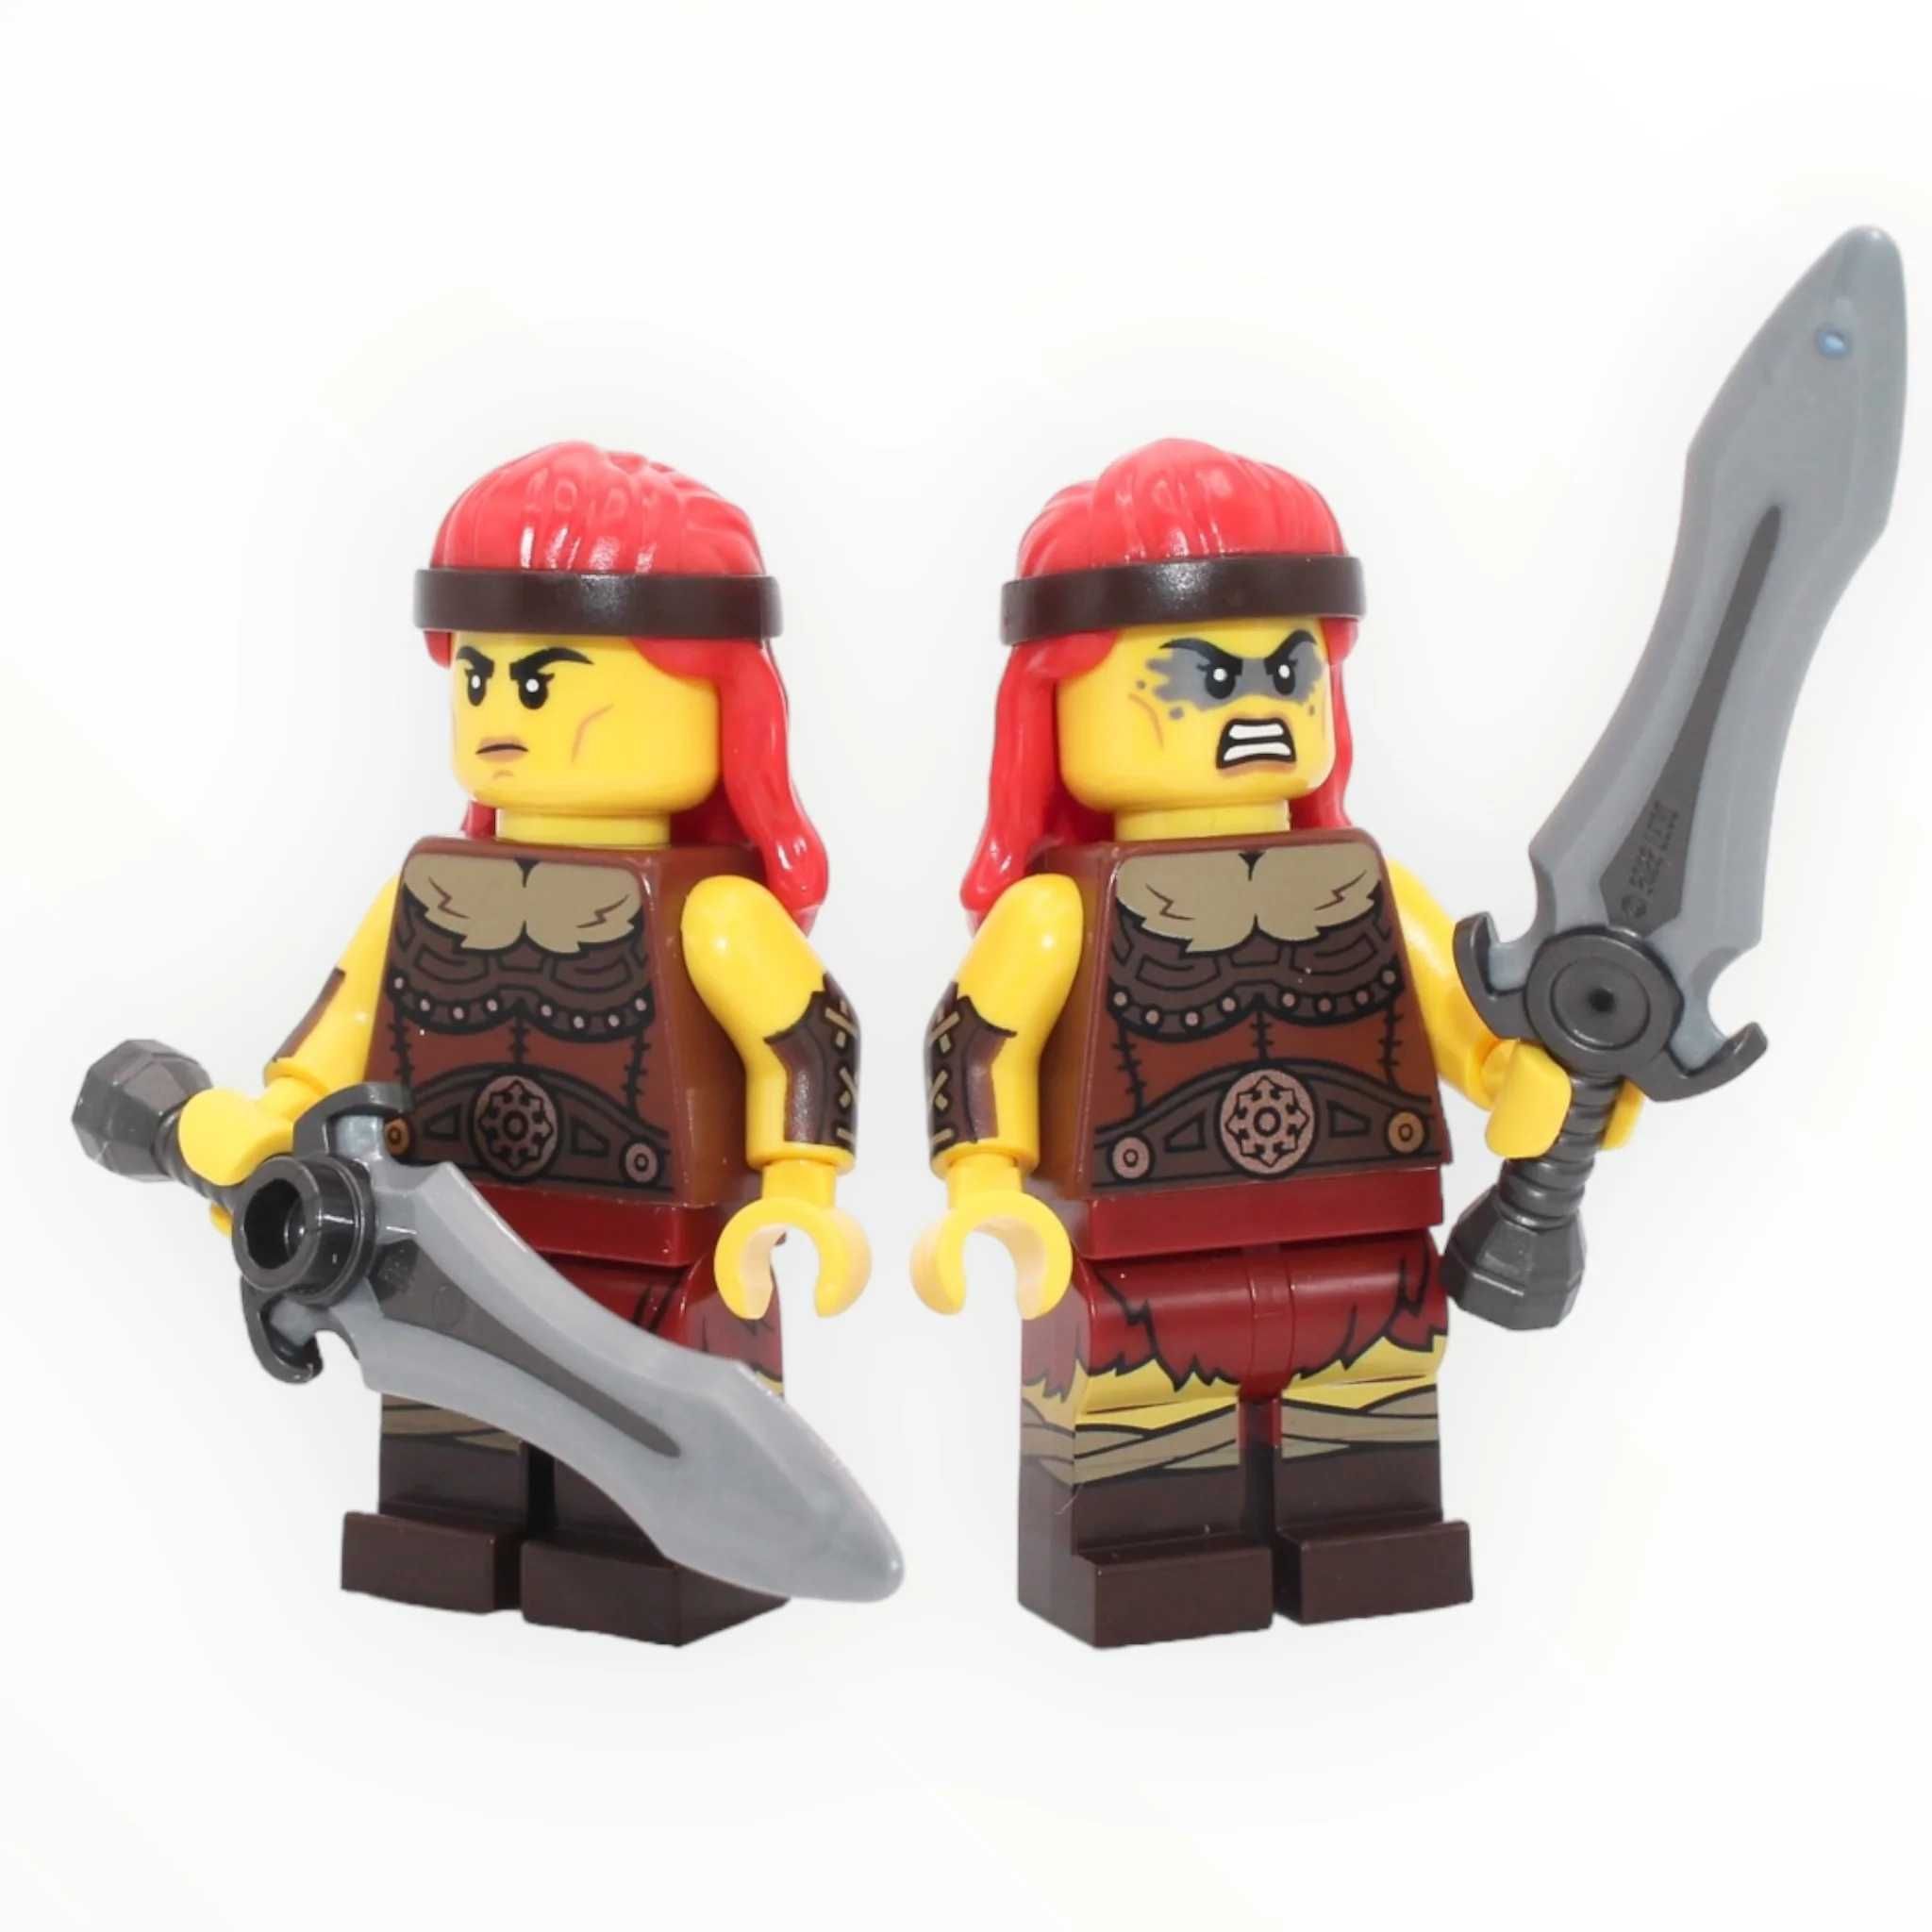 LEGO 71045 Minifigures - Series 25 Fierce Barbarian